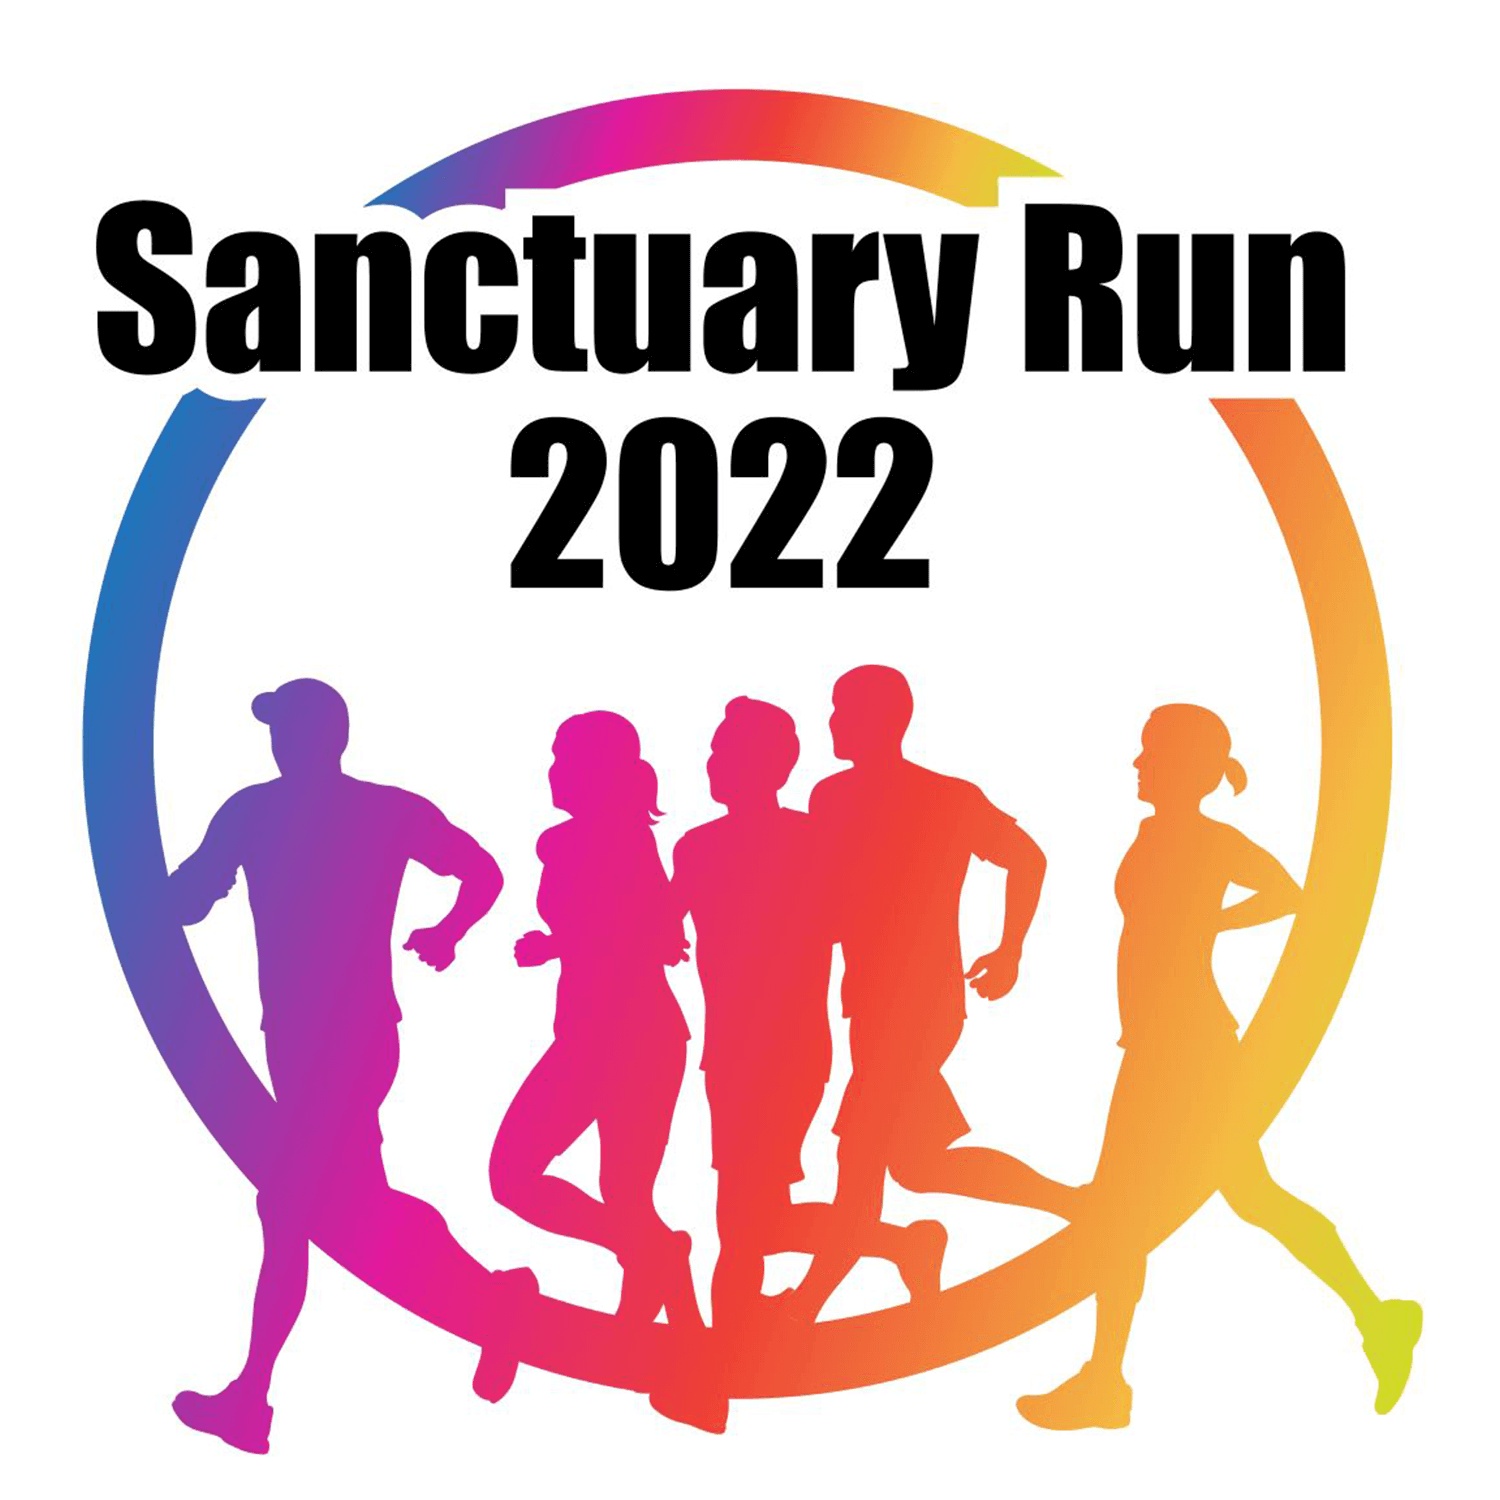 The World Sanctuary Run 2022